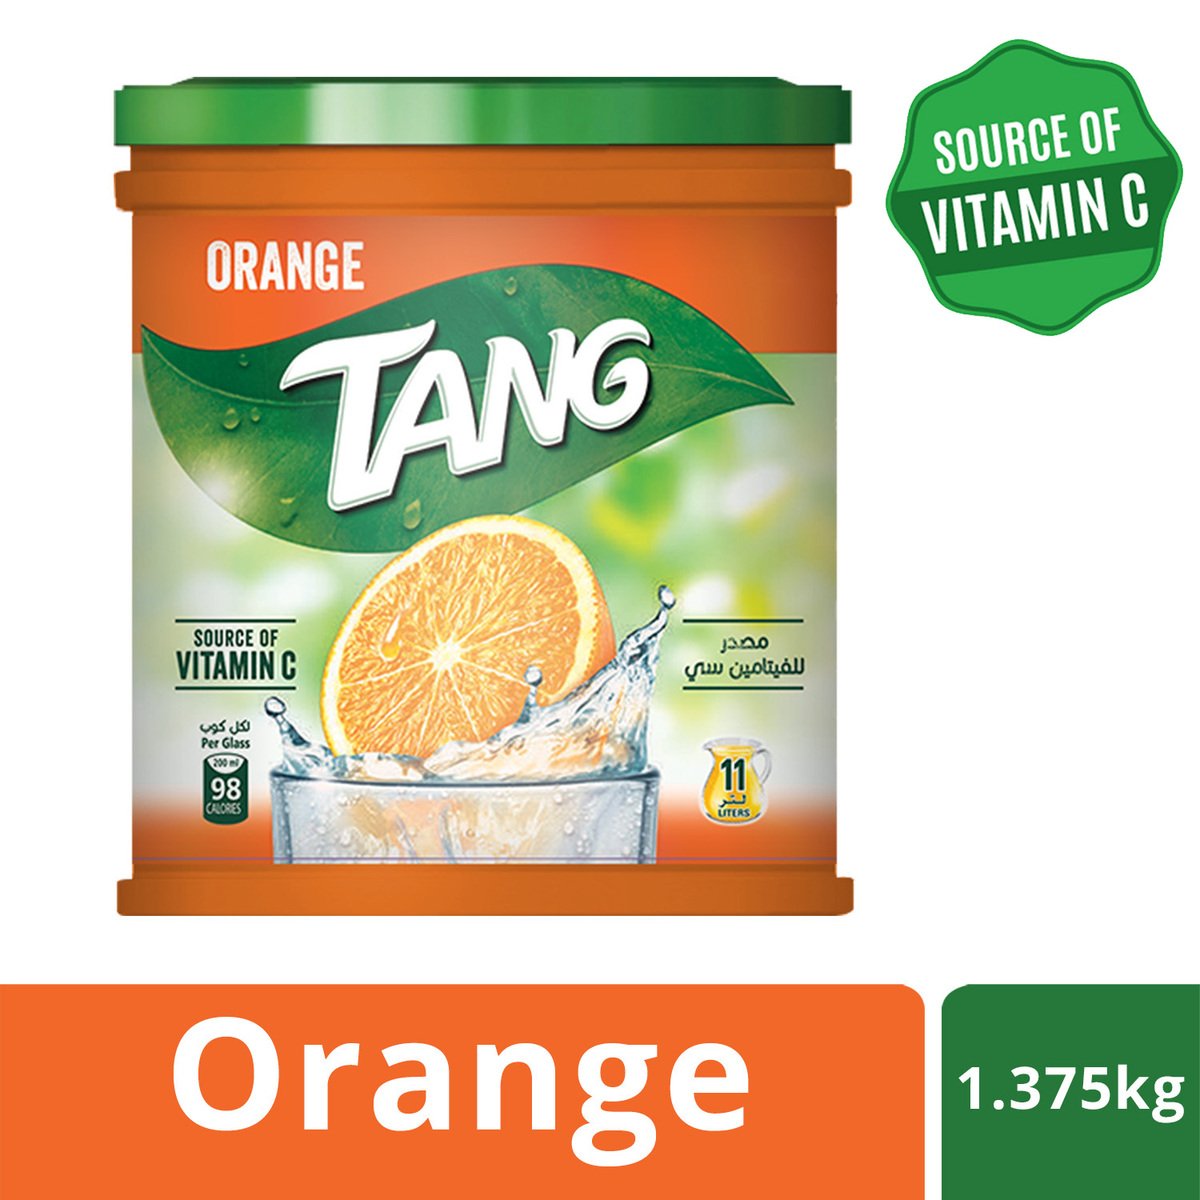 Tang Orange Instant Powdered Drink 1.375 kg